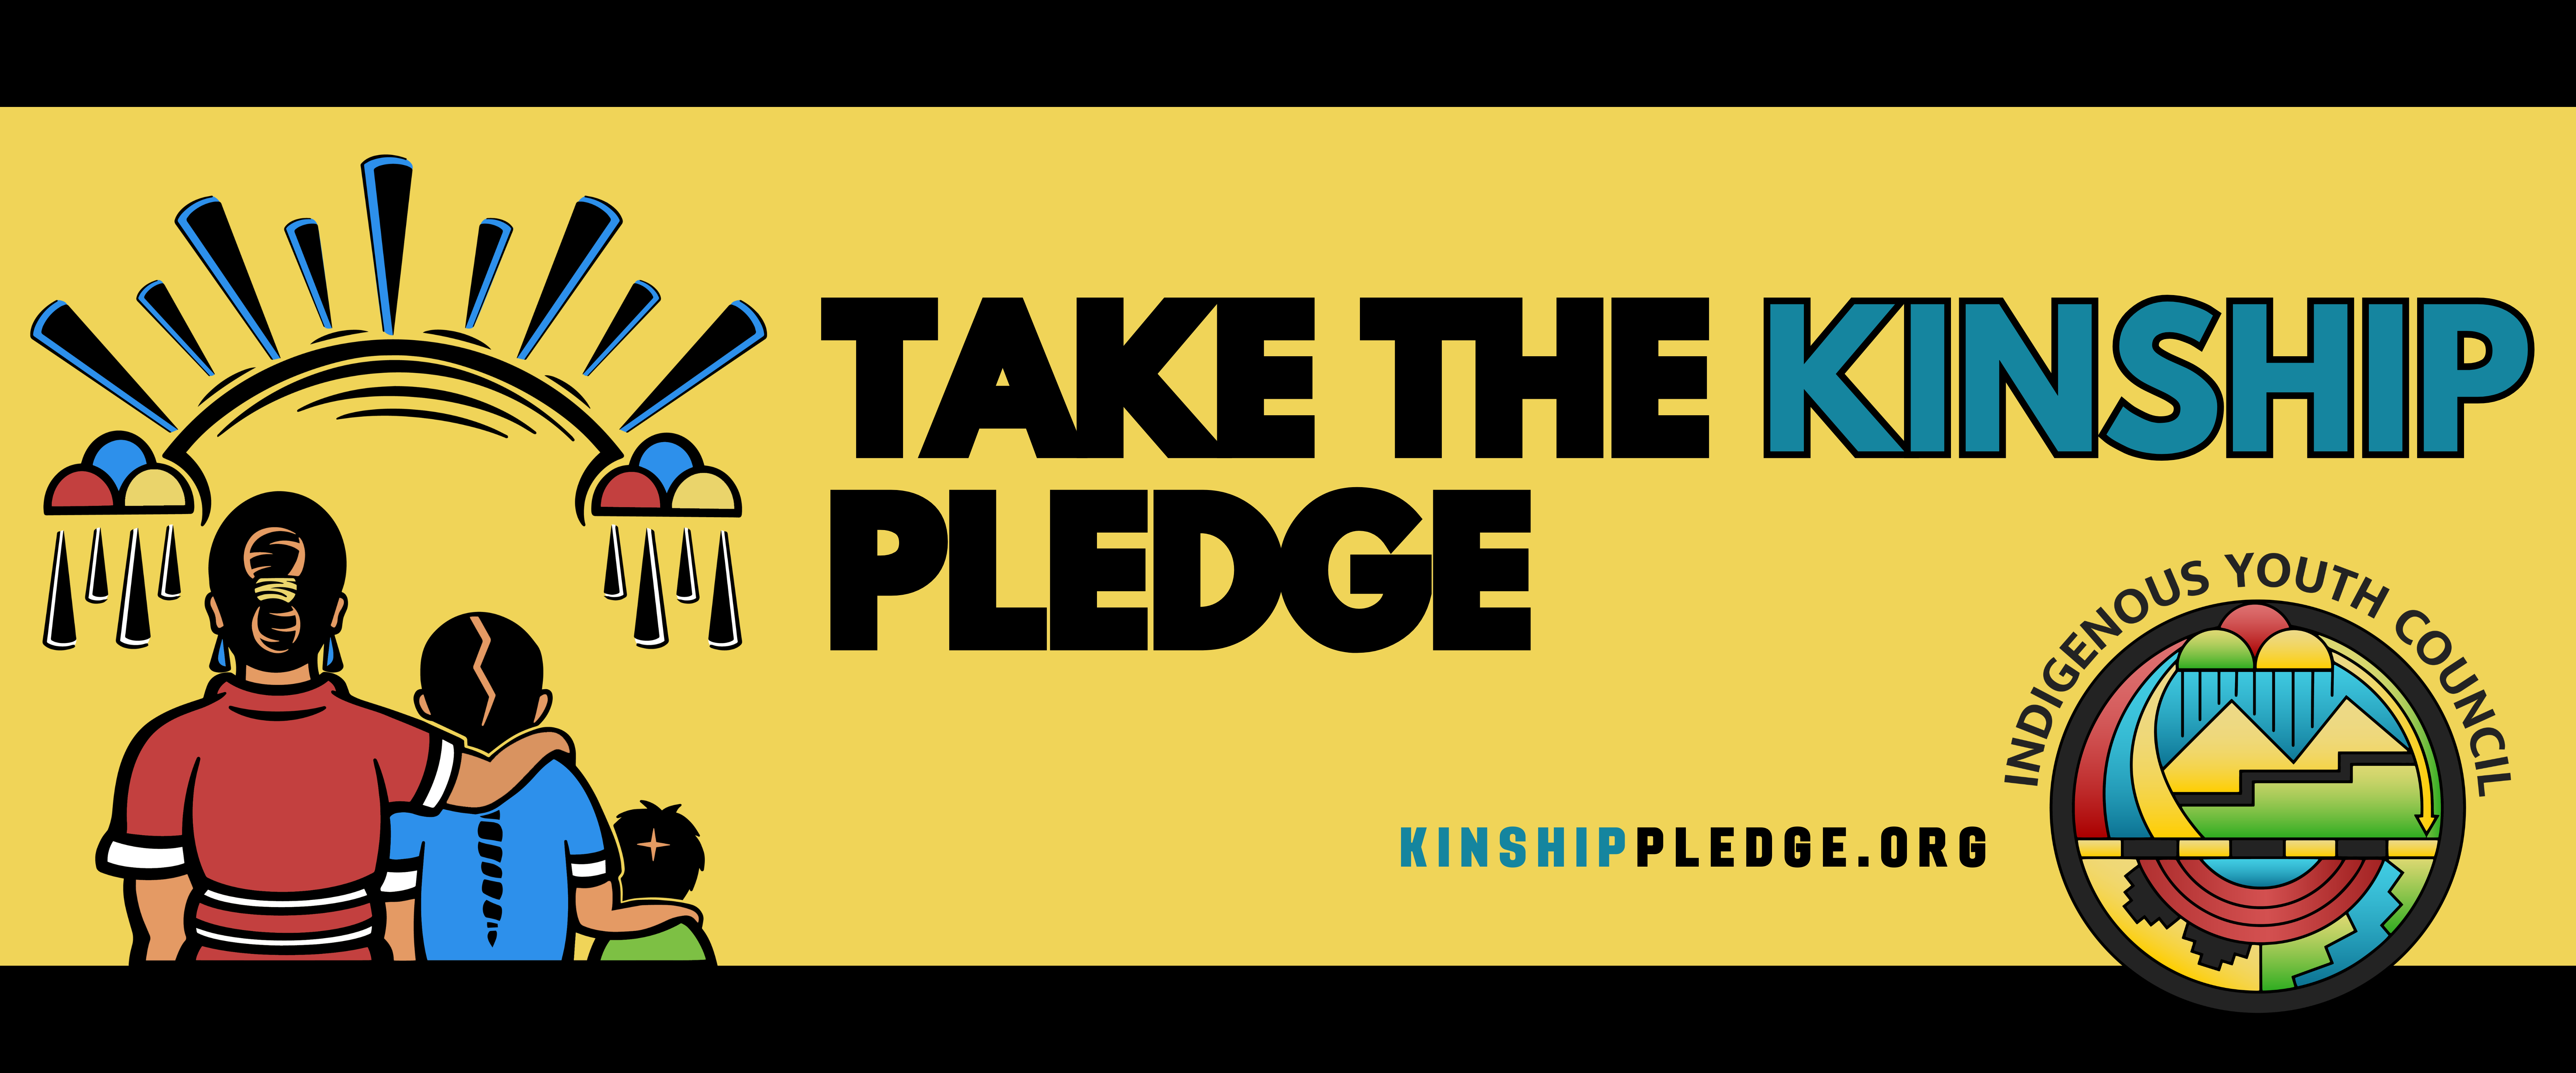 Take the Kinship Pledge banner